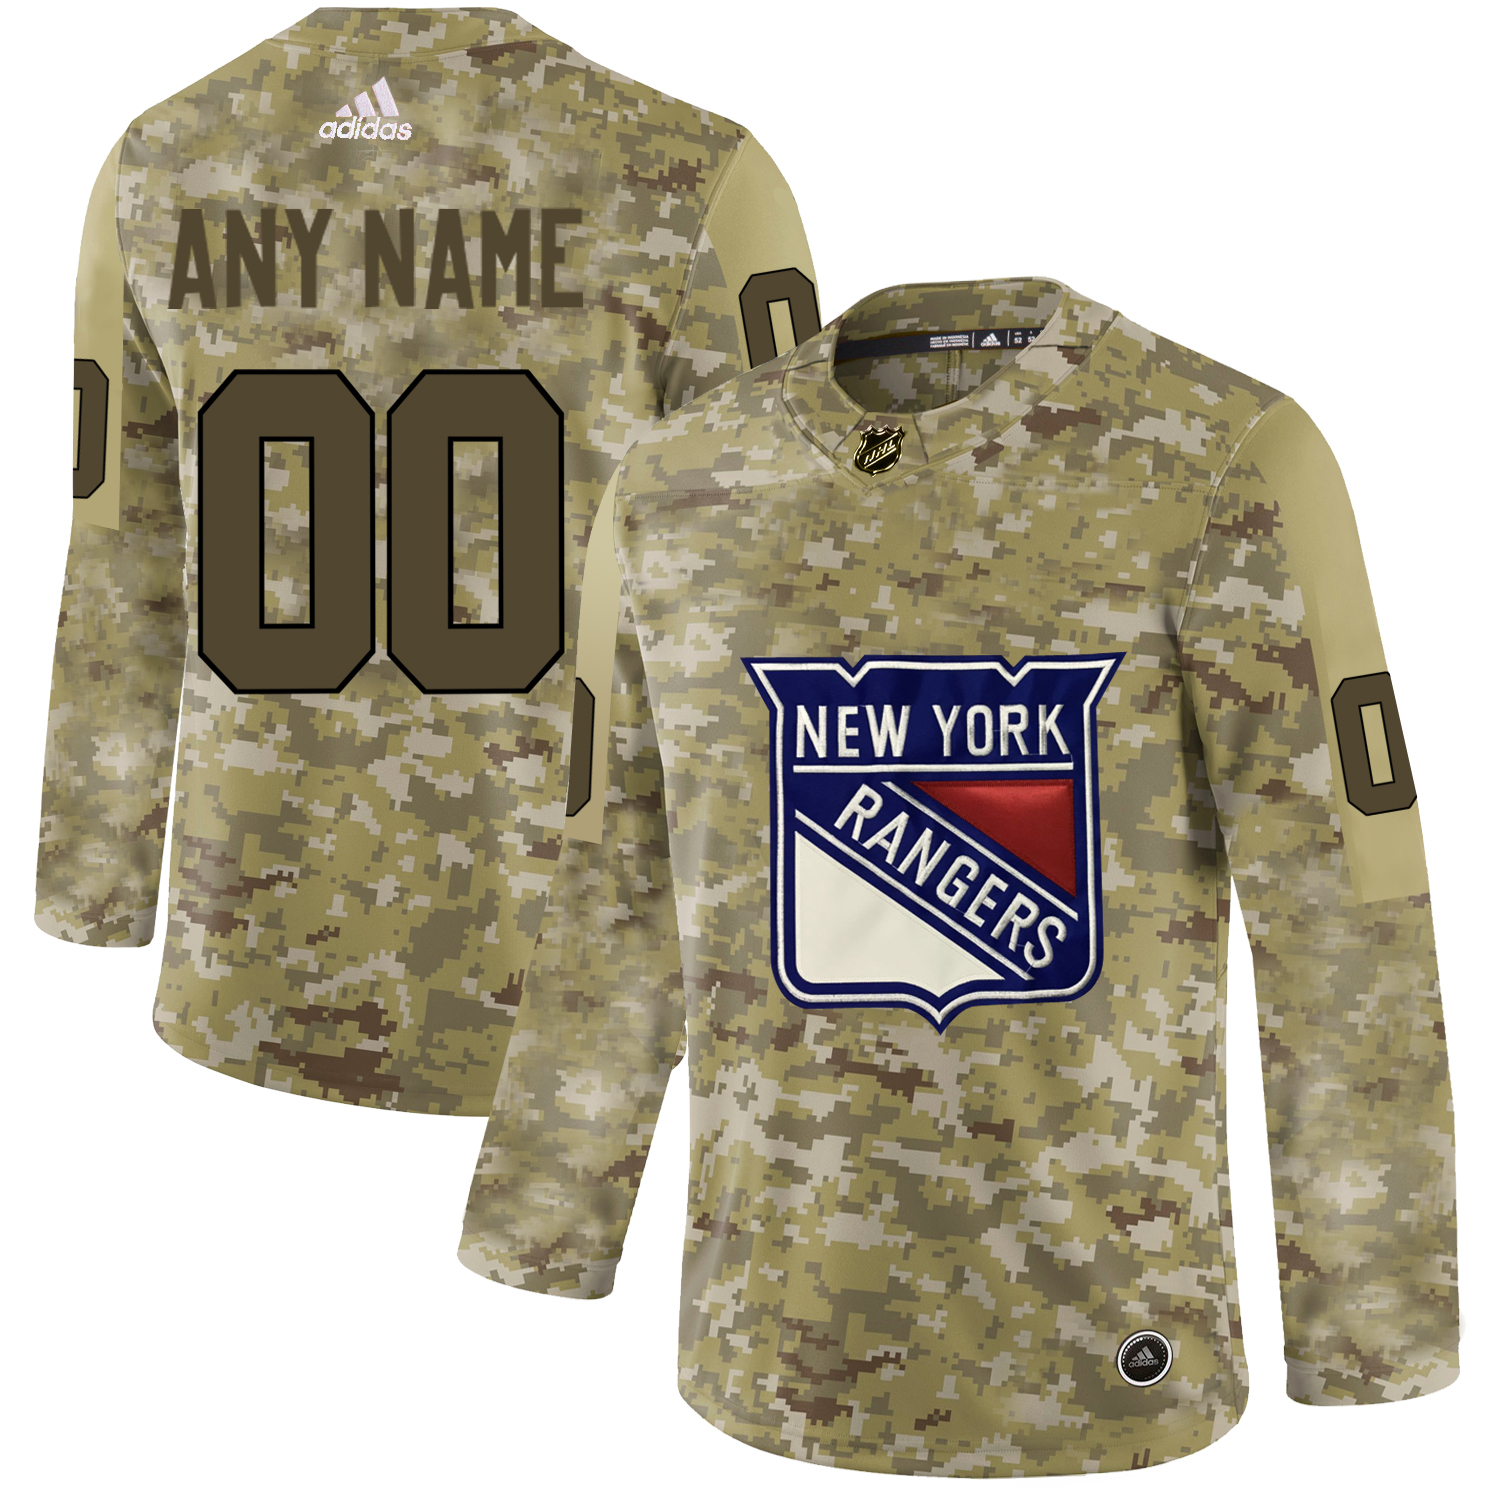 New York Rangers Camo Men's Customized Adidas Jersey